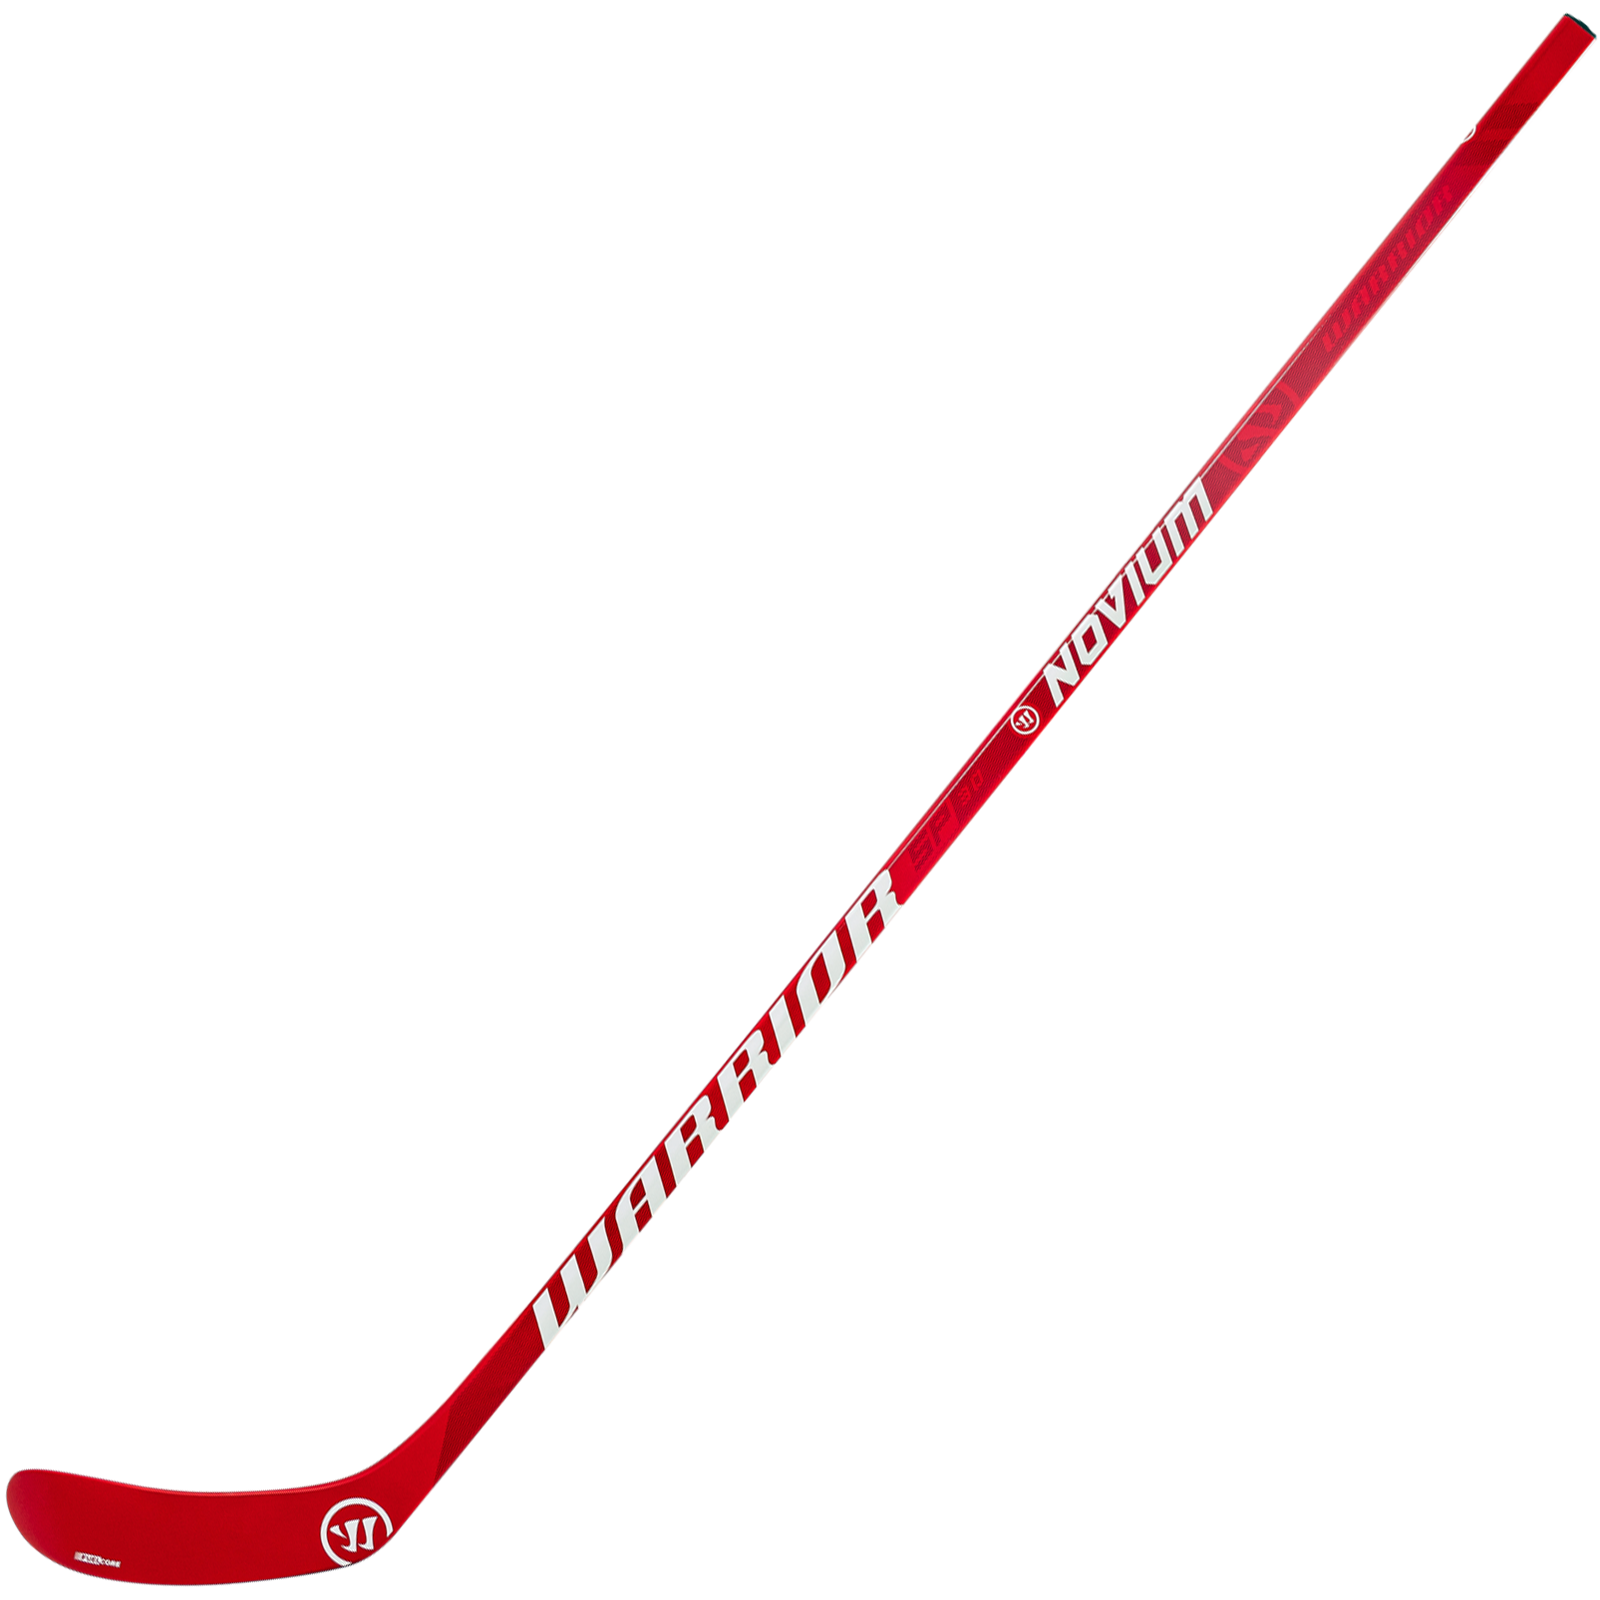 Warrior Novium SP Junior Hockey Stick